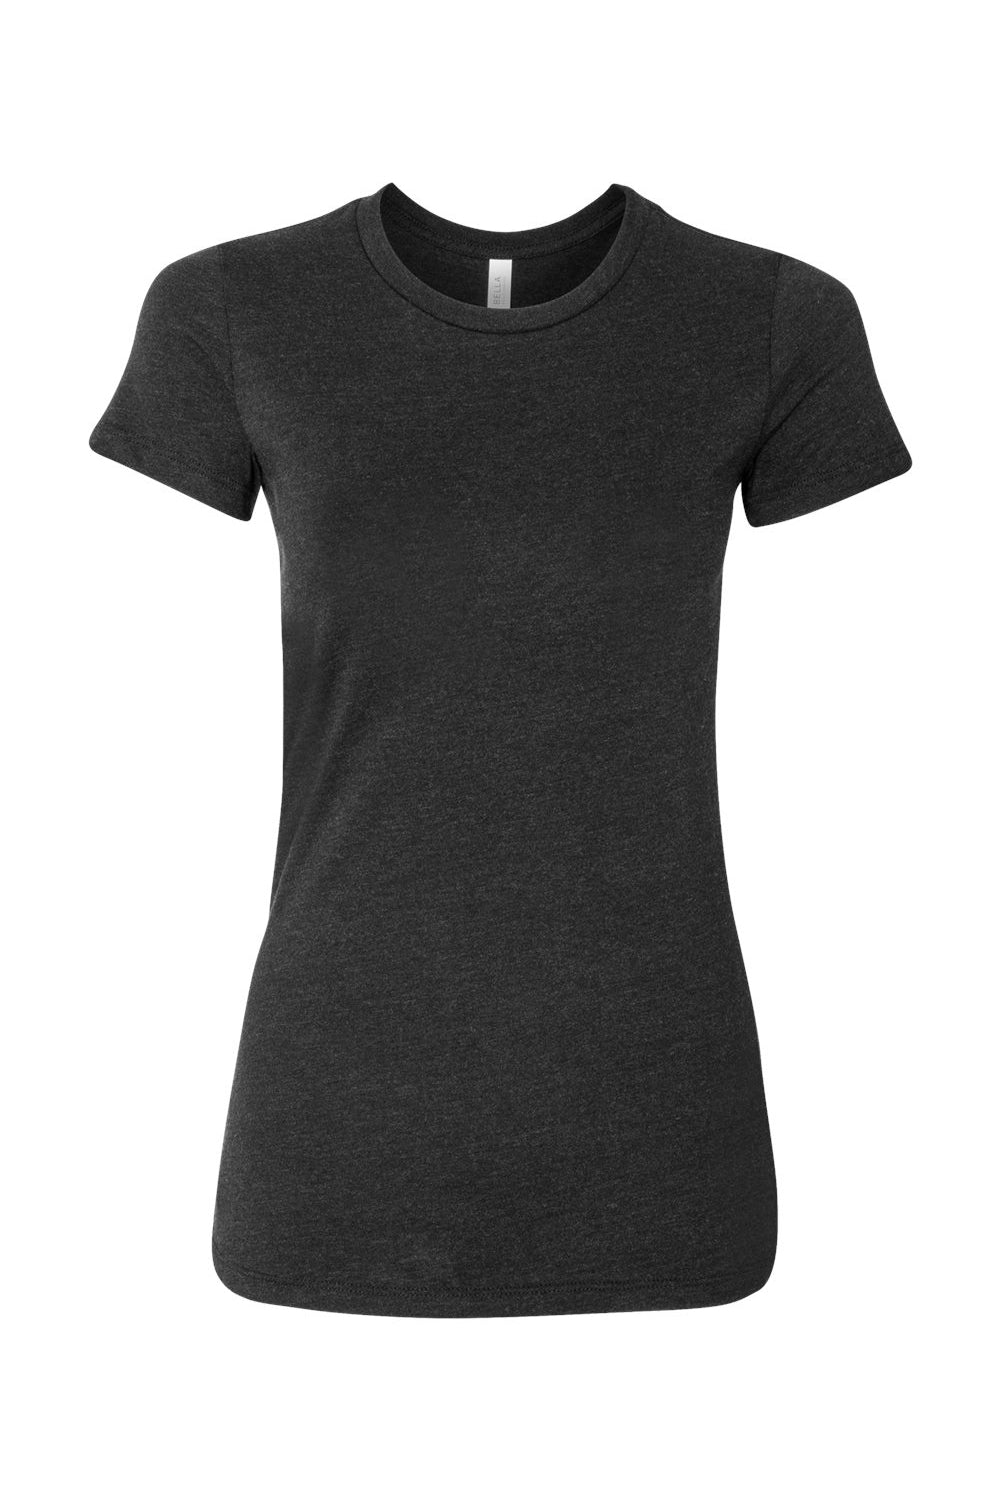 Bella + Canvas BC6004/6004 Womens The Favorite Short Sleeve Crewneck T-Shirt Heather Black Flat Front